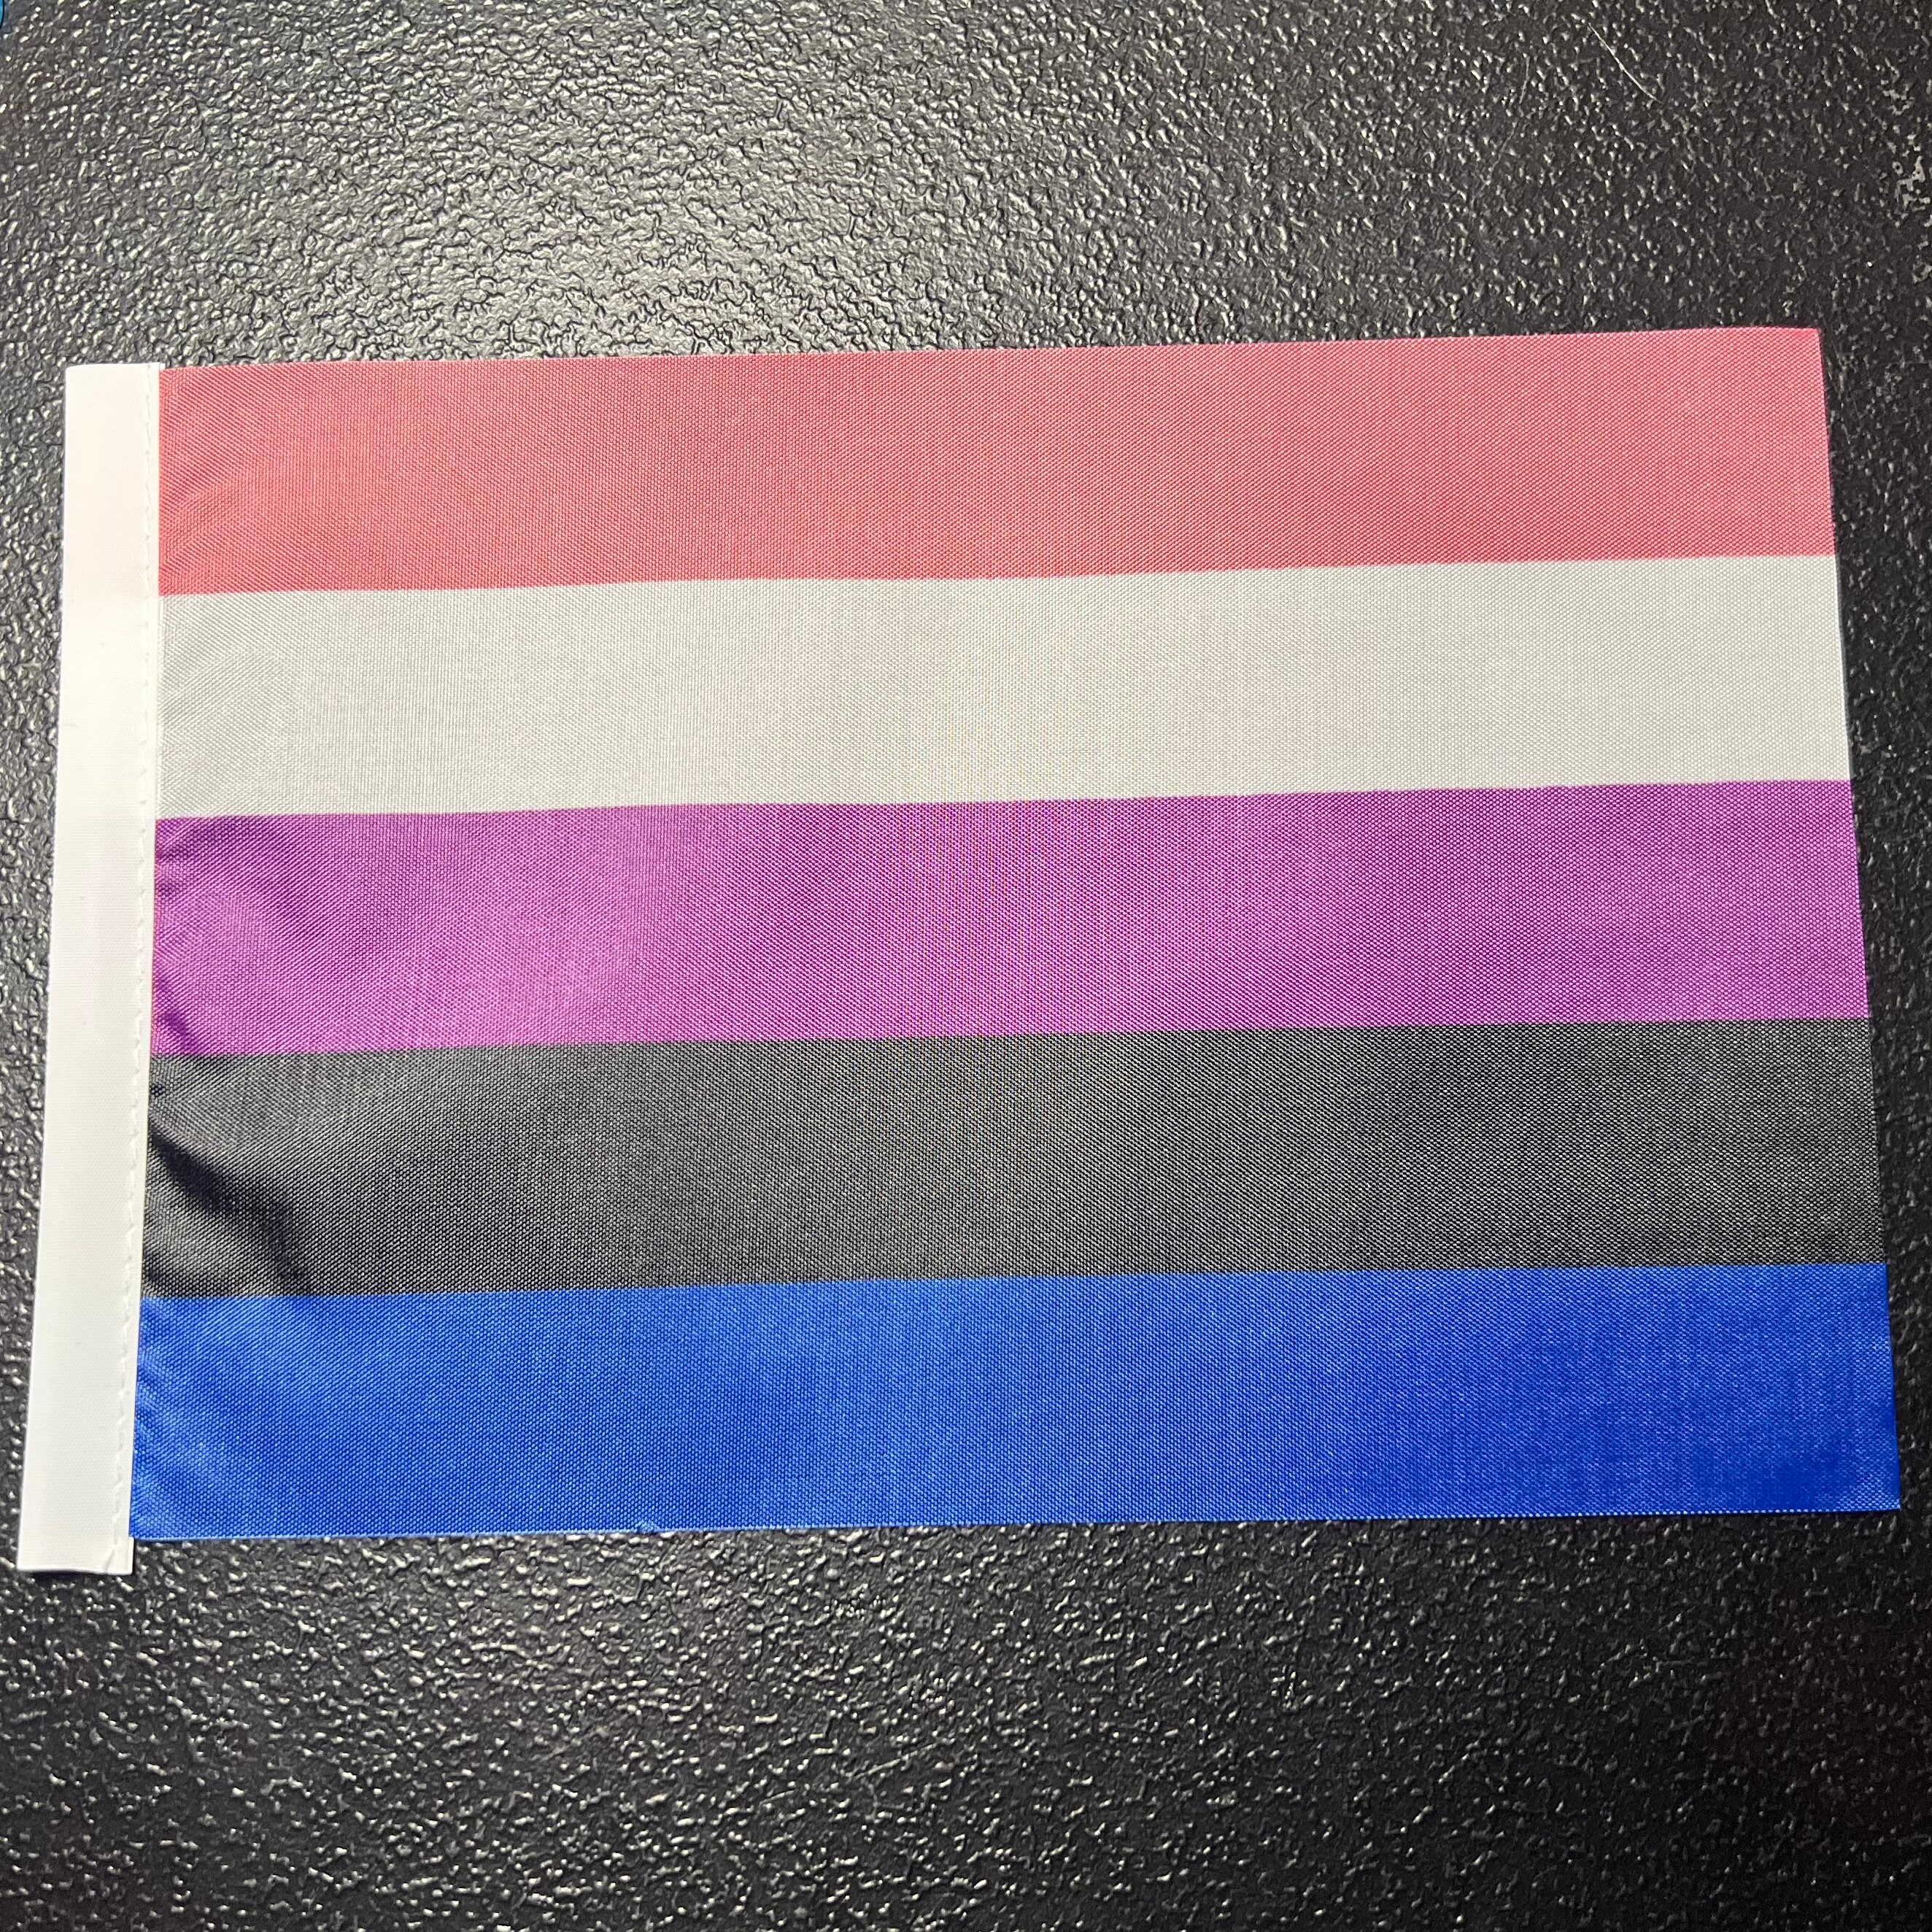 louis tomlinson walls logo bisexual flag  Throw Blanket for Sale